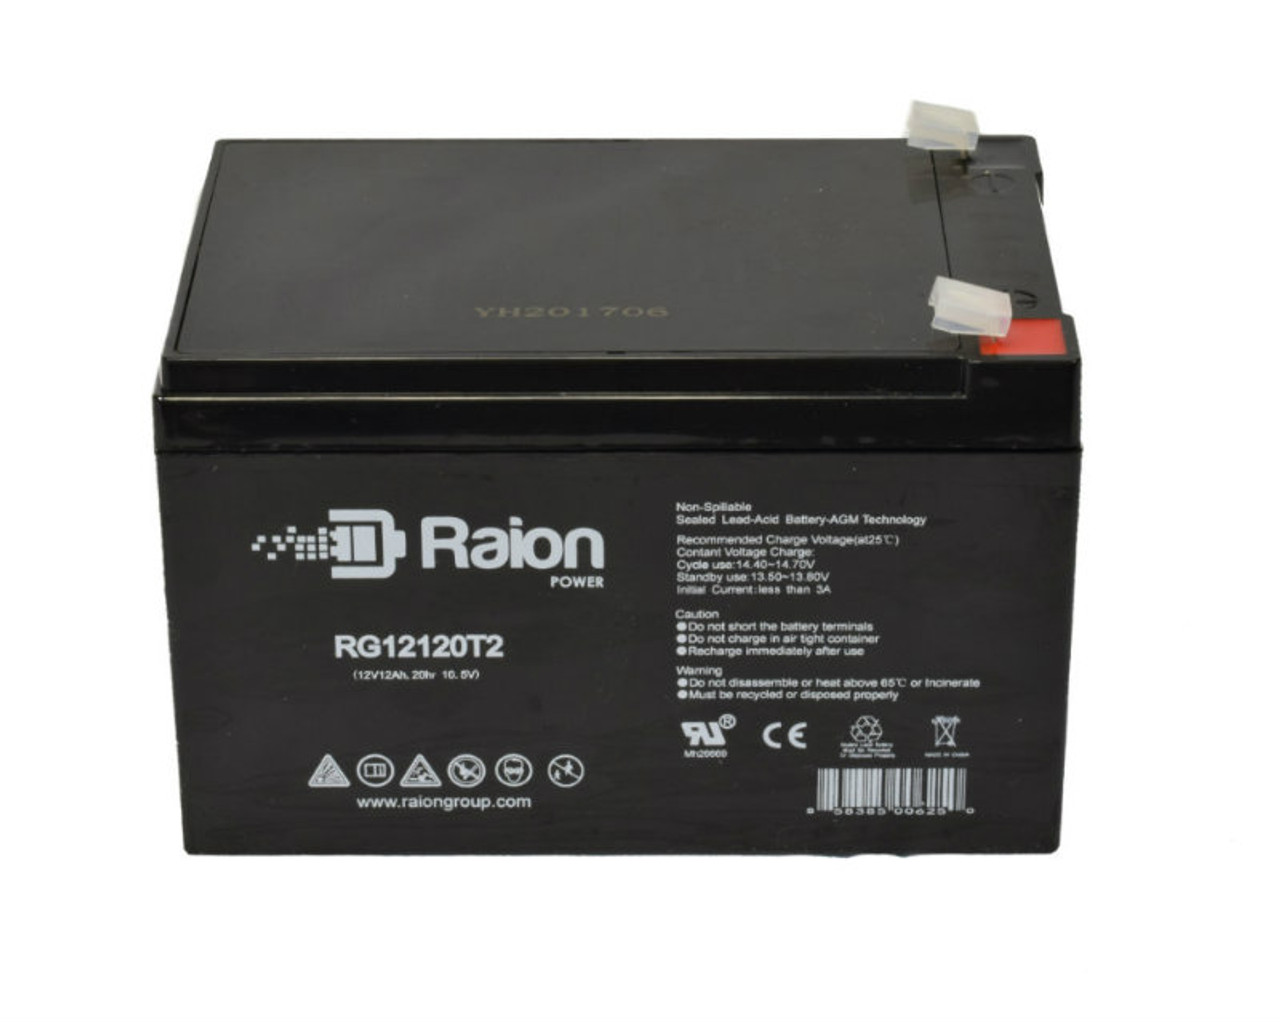 Raion Power RG12120T2 SLA Battery for Mizuho OSI 6850 Profx Orthopedic Surgical Table